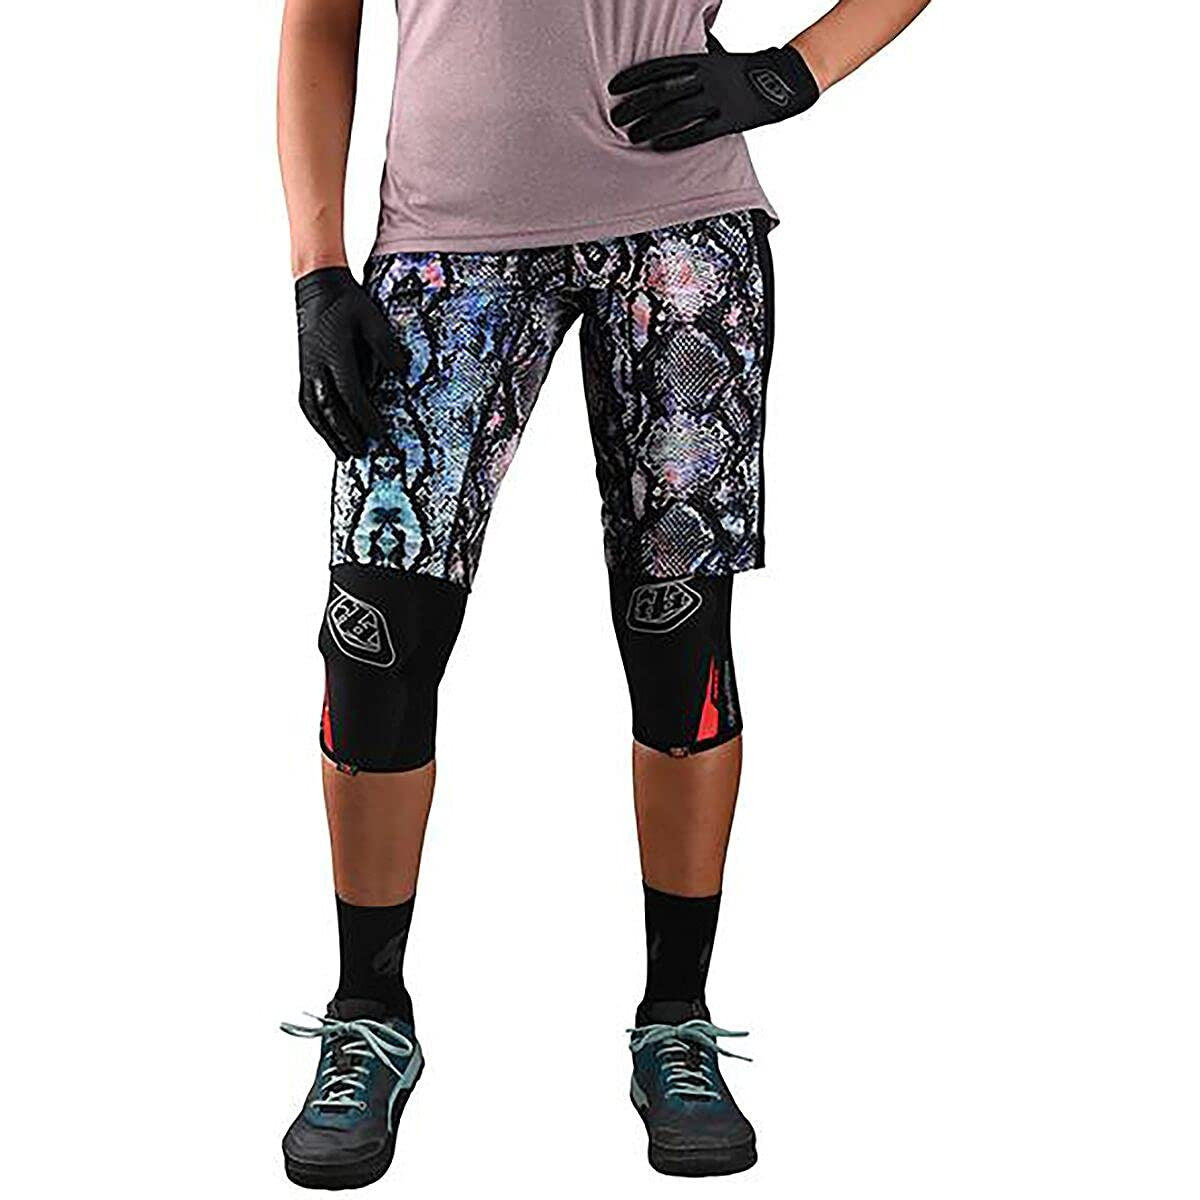 Troy Lee Designs Women's Luxe Shorts Multicolor XS - Troy Lee Designs Bike Shorts